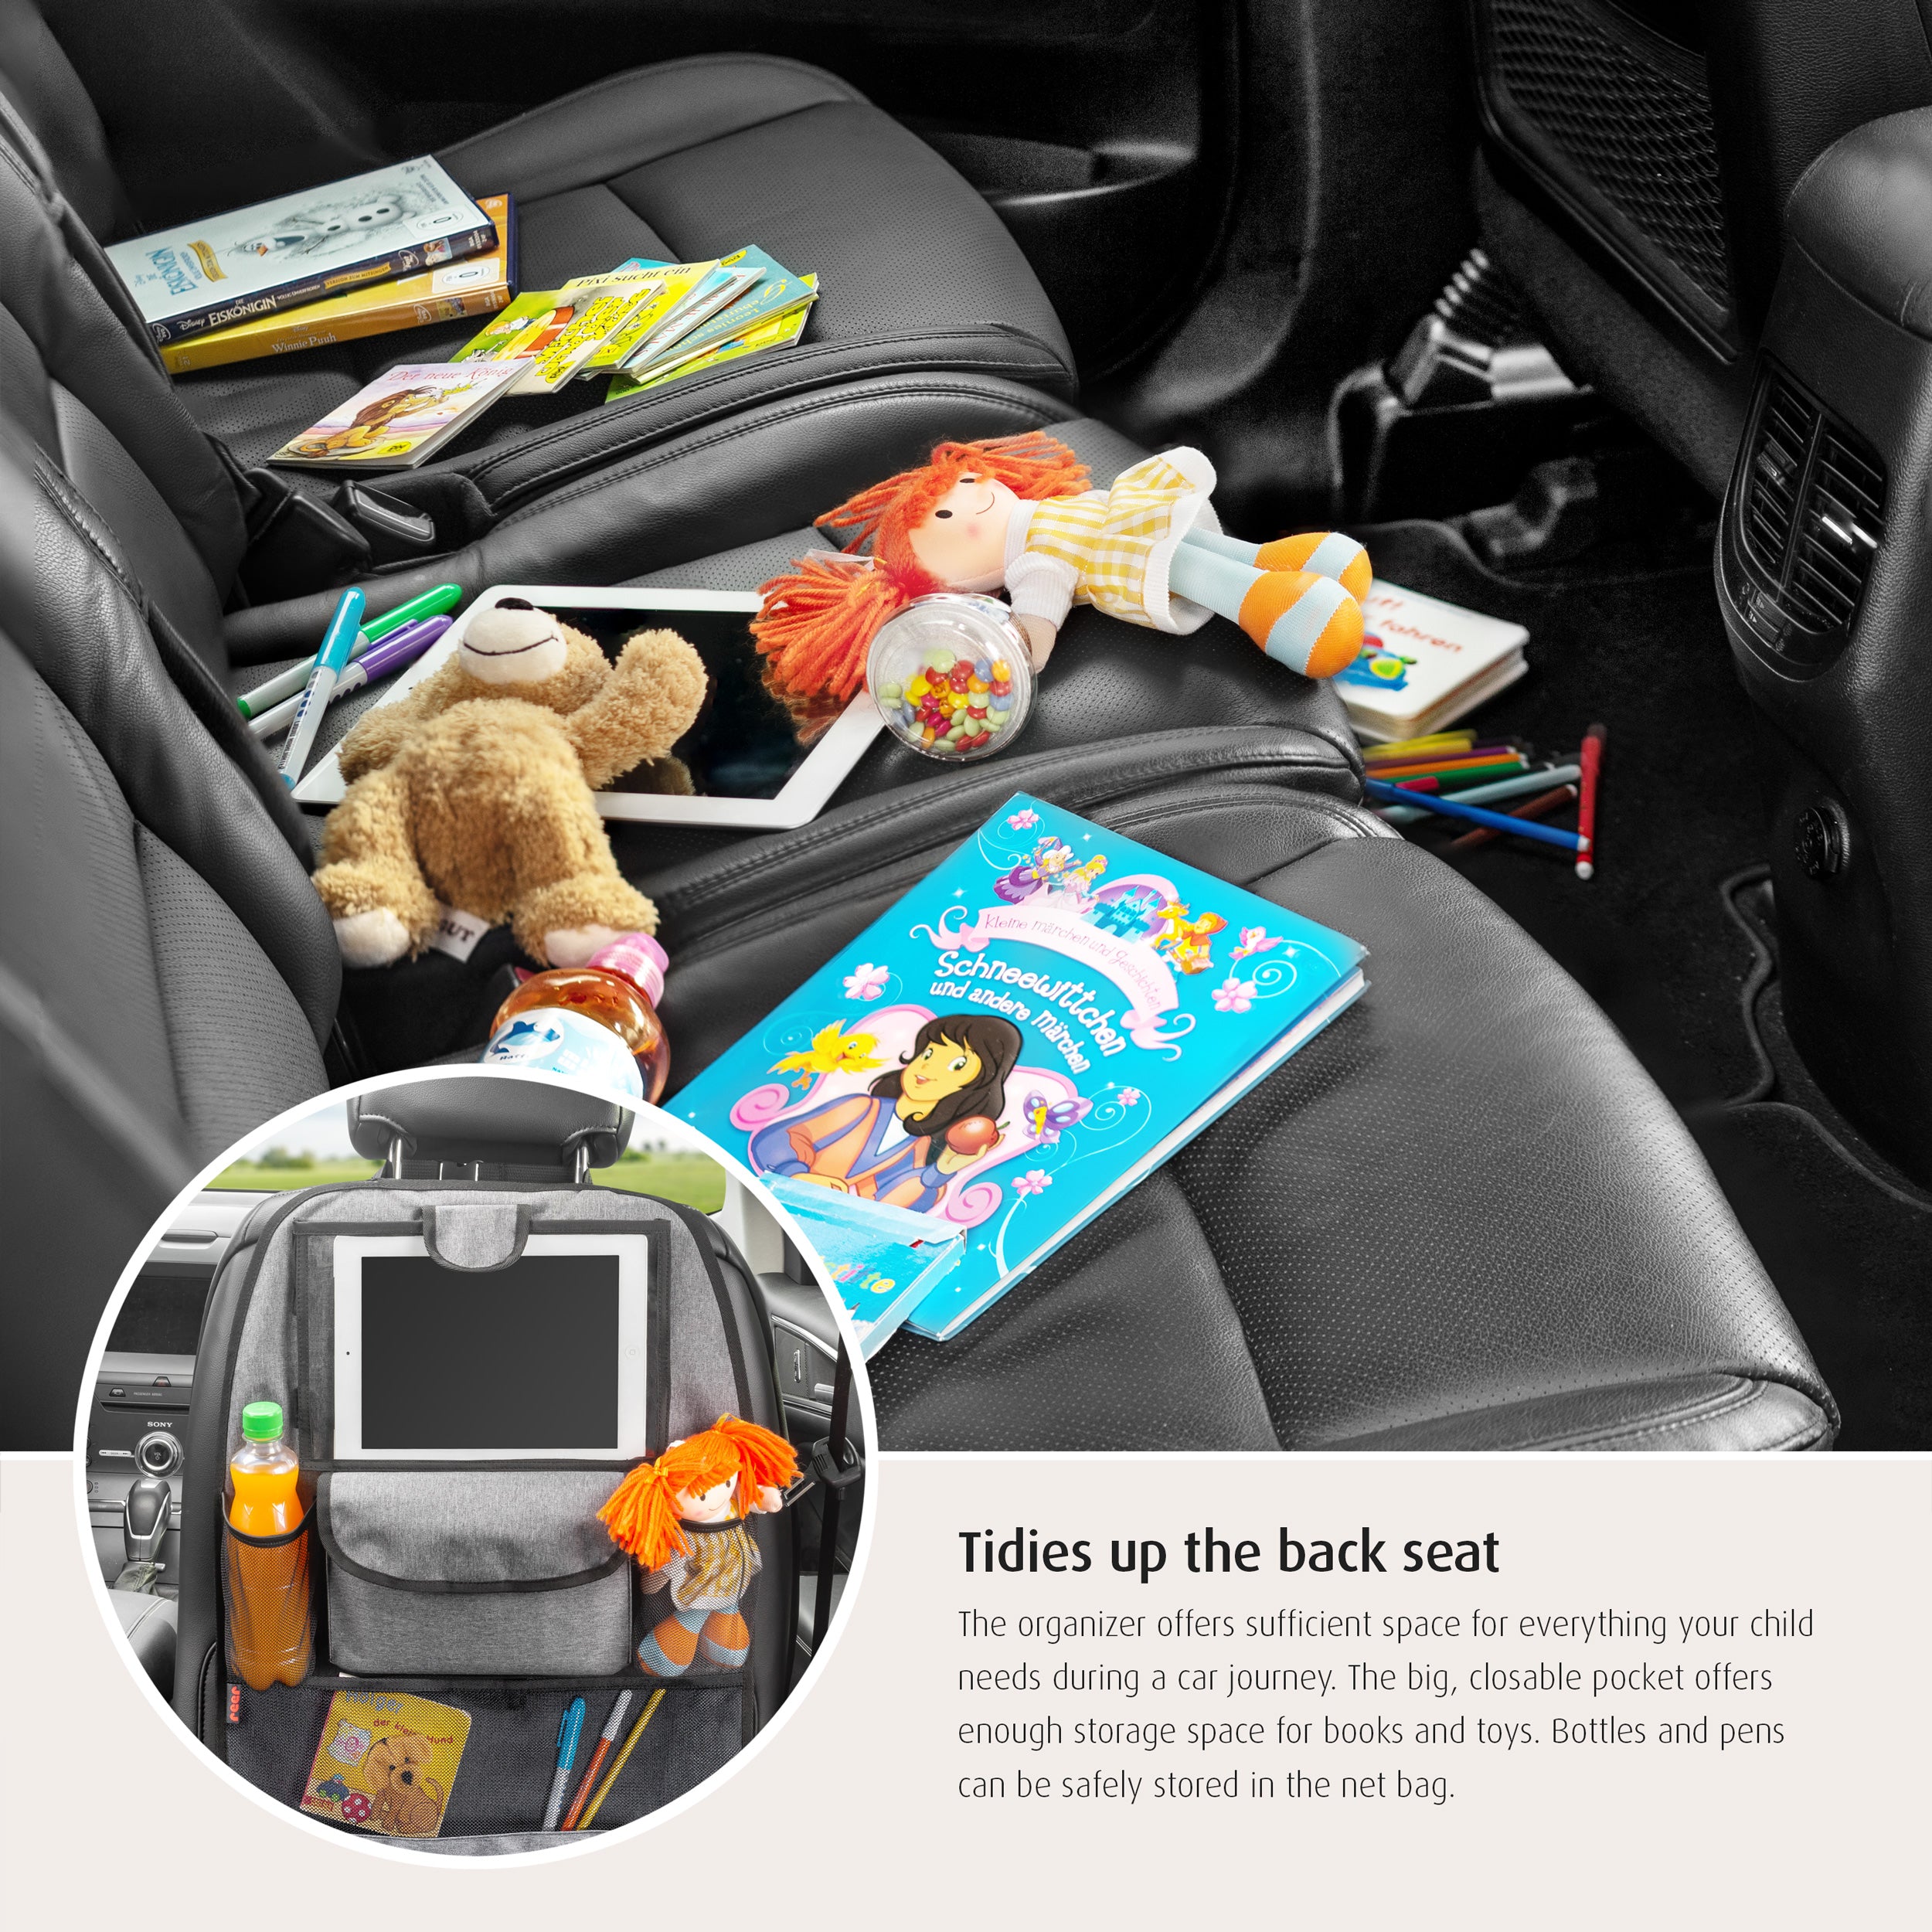 Reer TravelKid Entertain car seat organizer